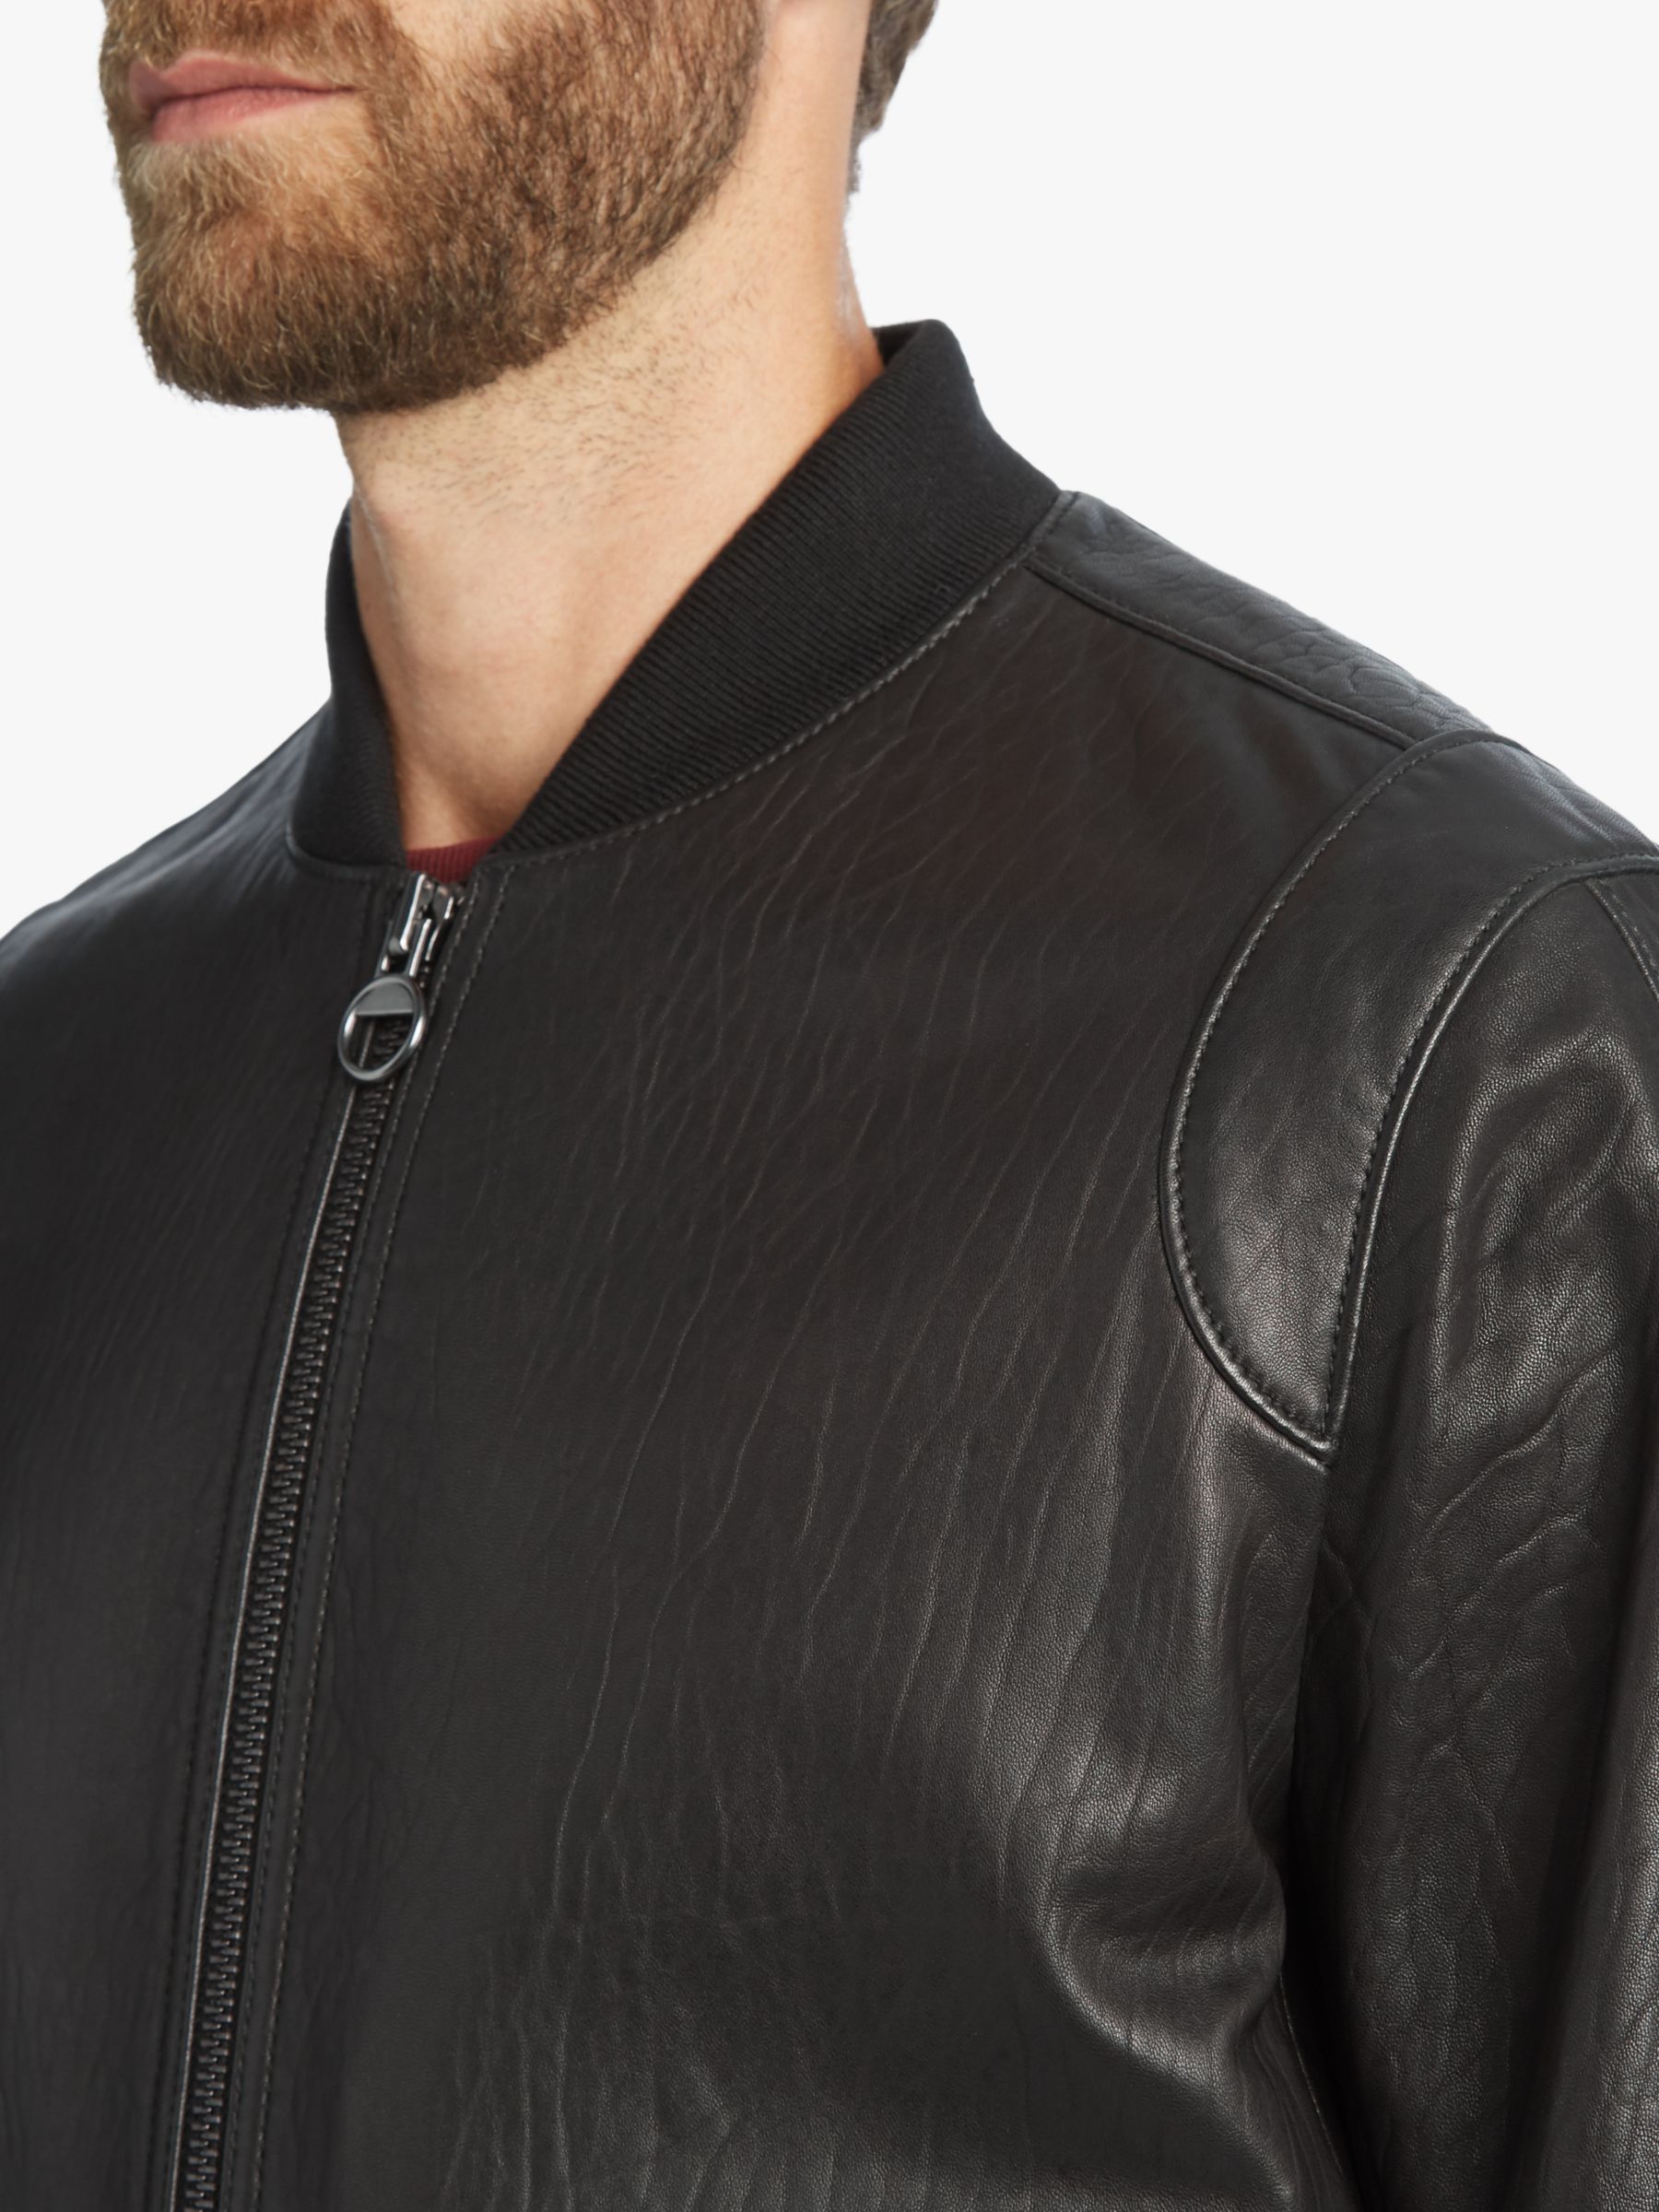 BOSS Josiah Leather Jacket, Black at 